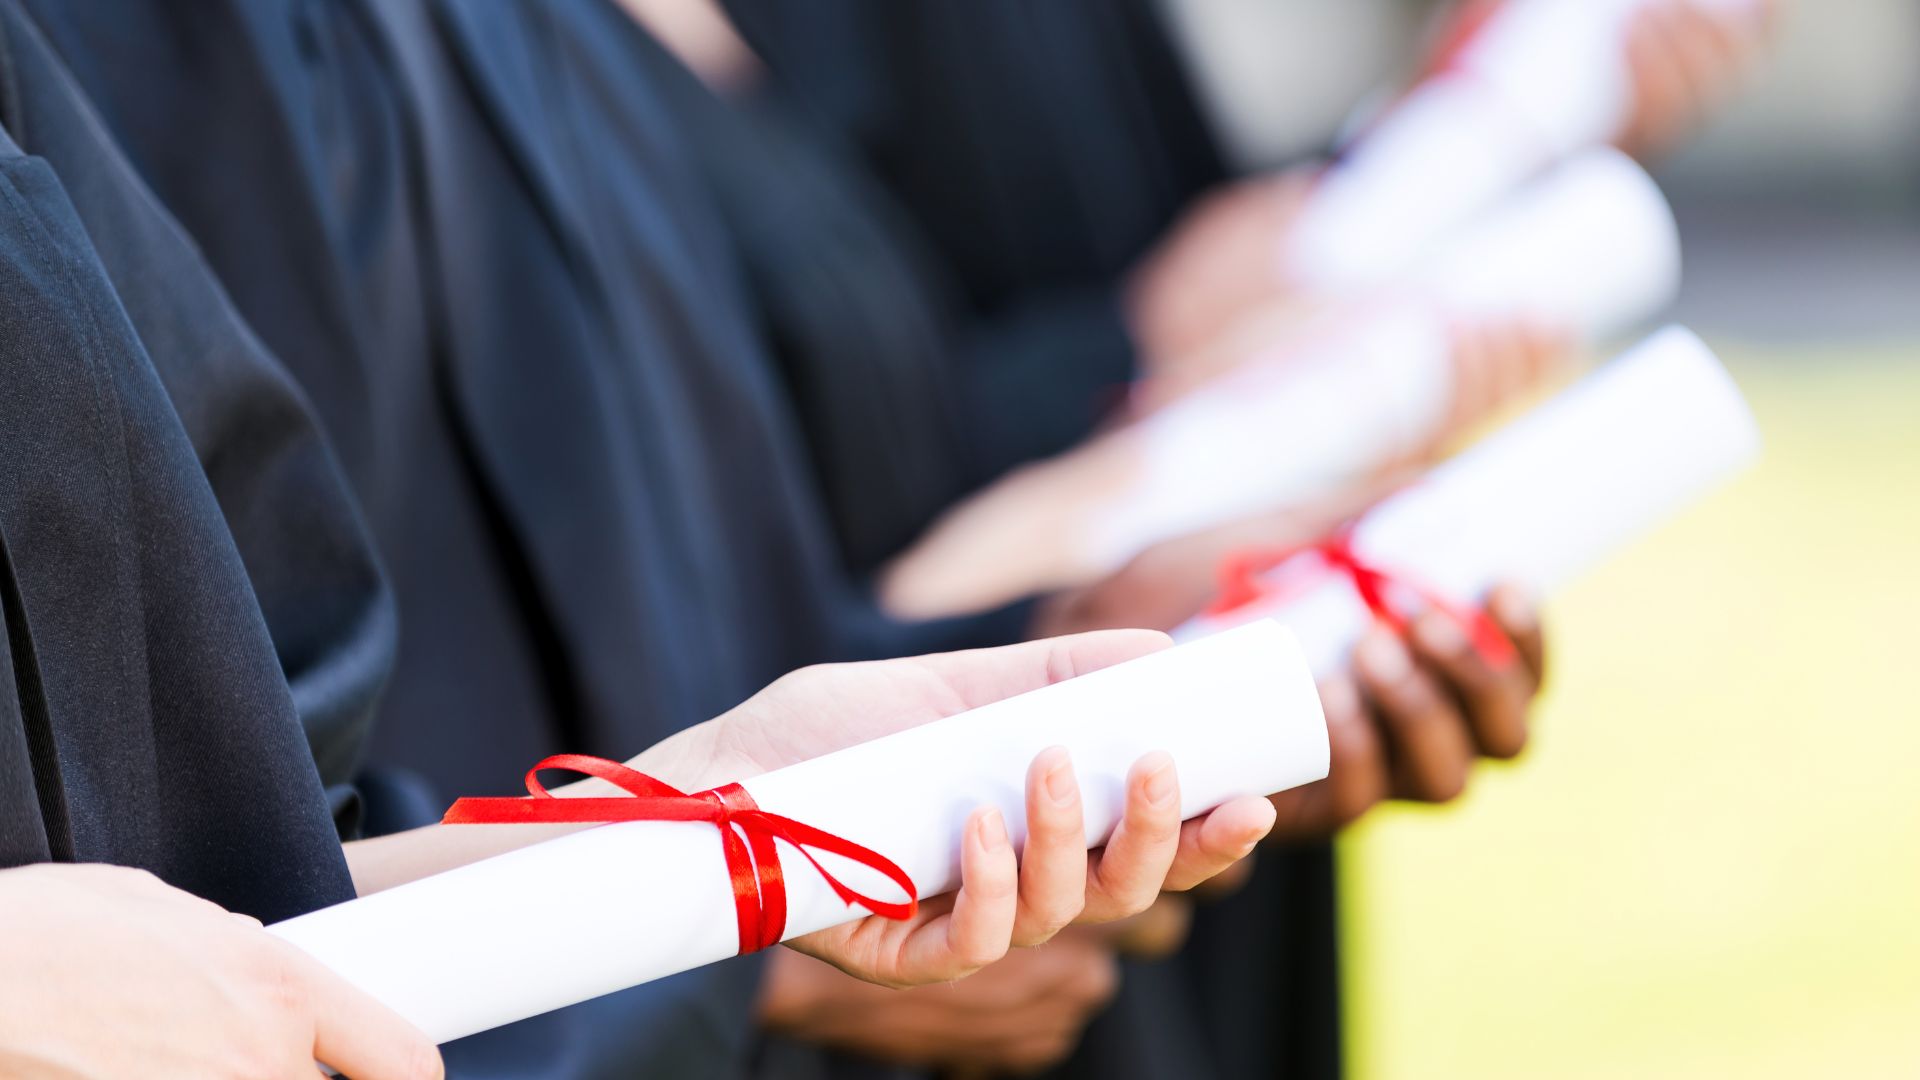 graduates holding diplomas tied up in red ribbon